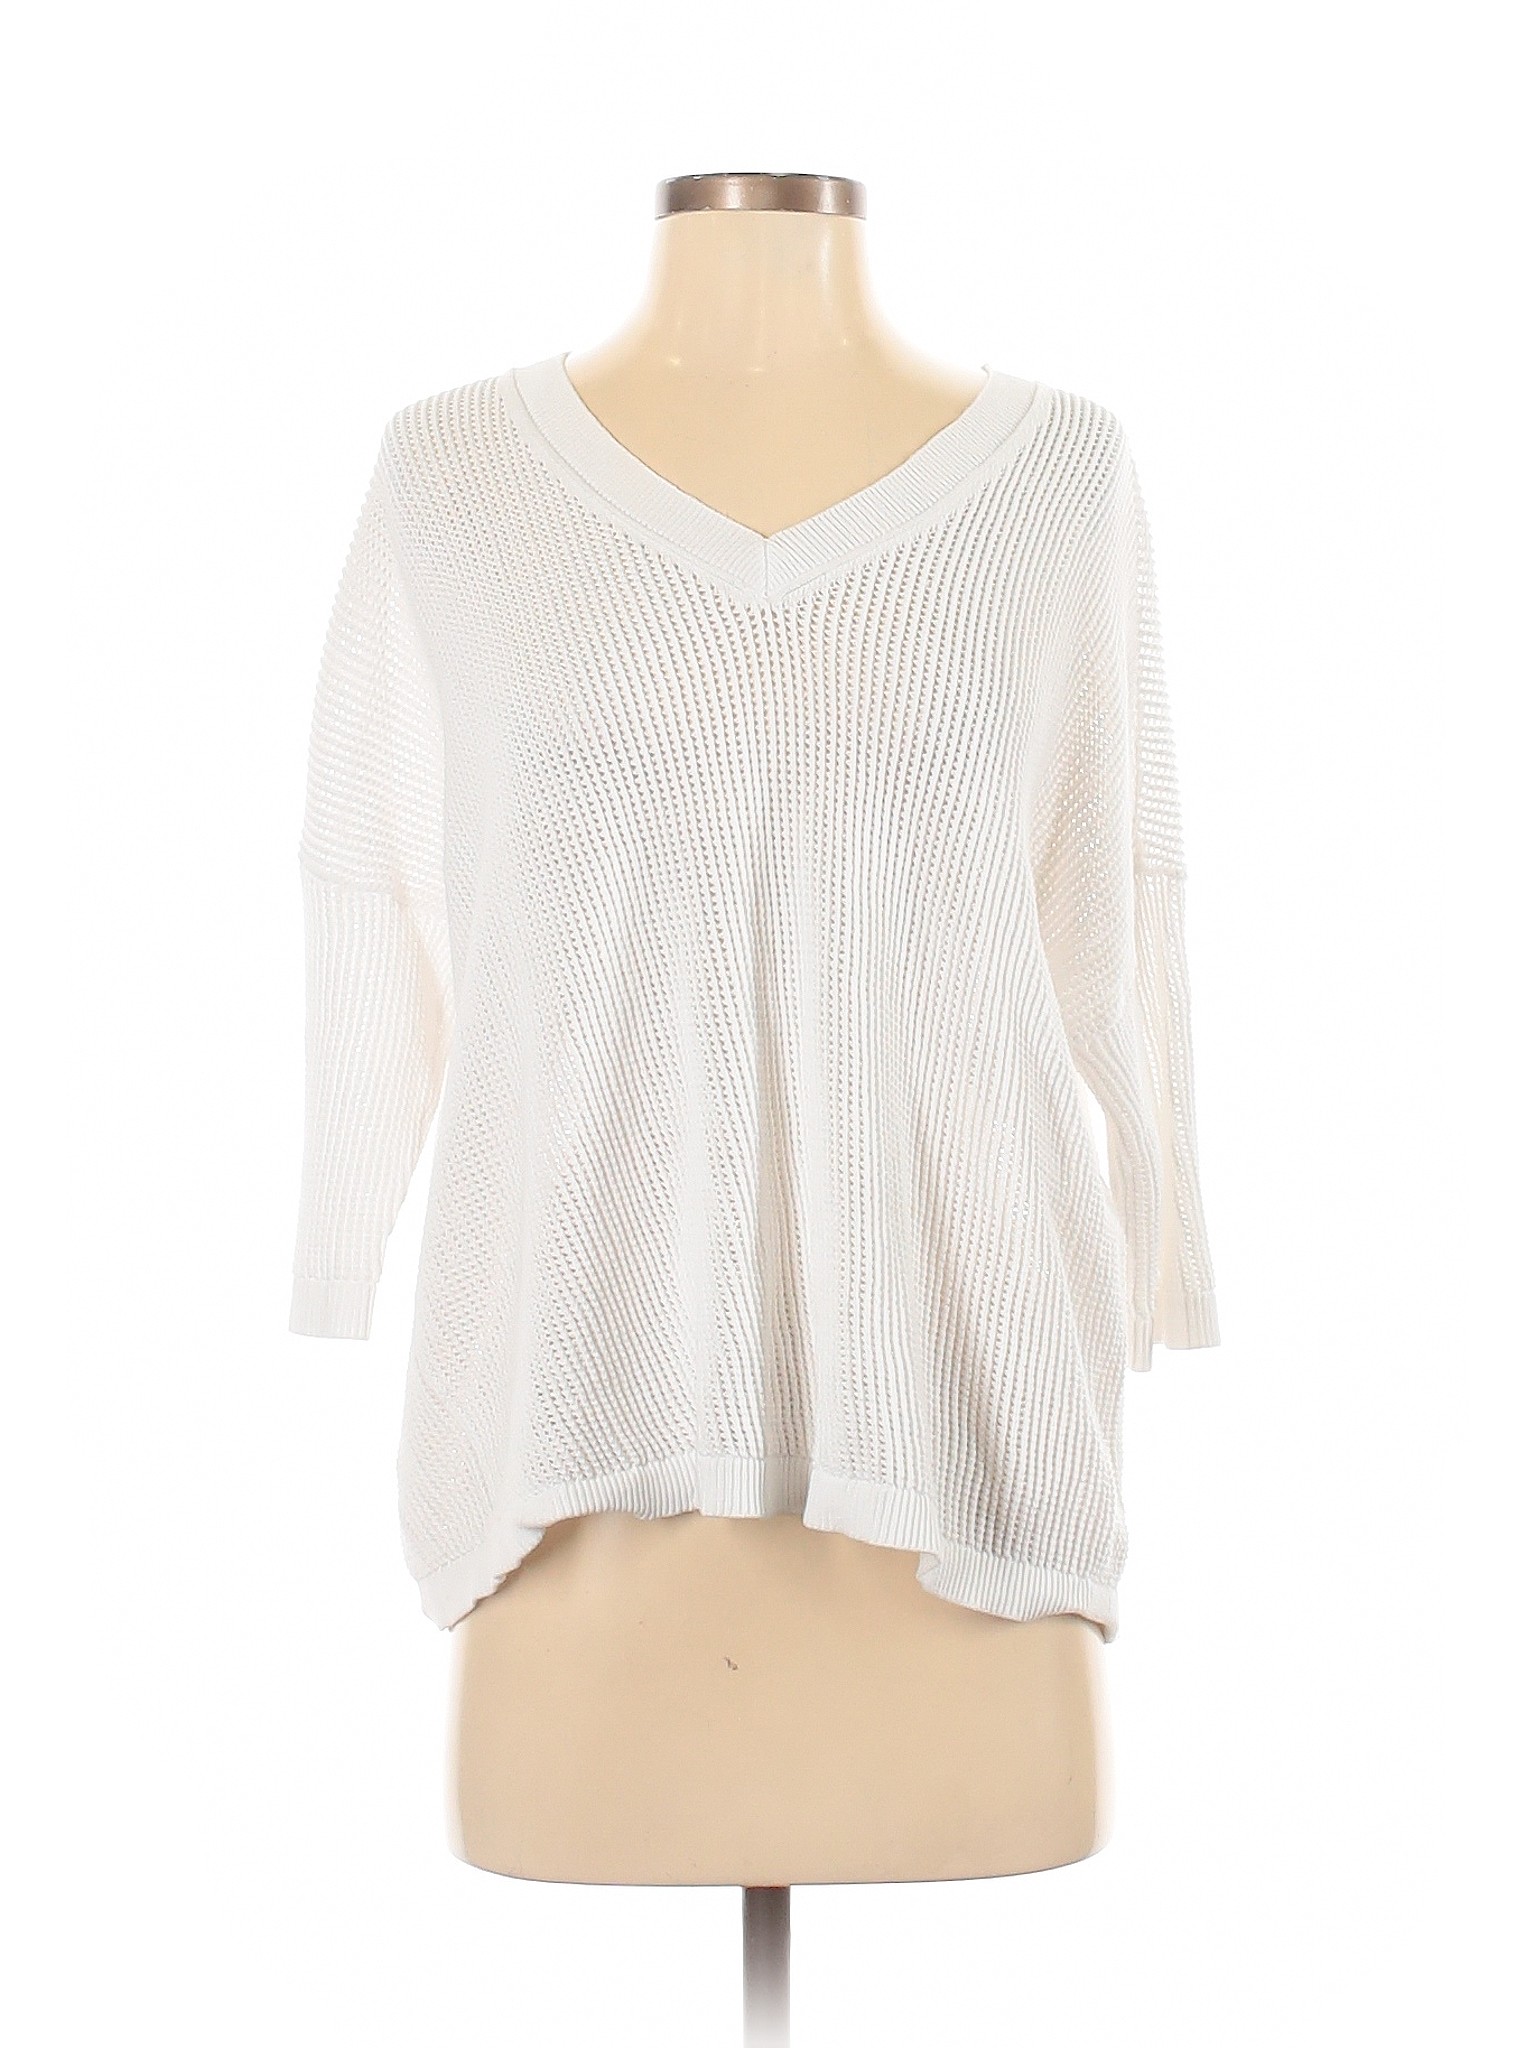 CAbi Women White Pullover Sweater S | eBay